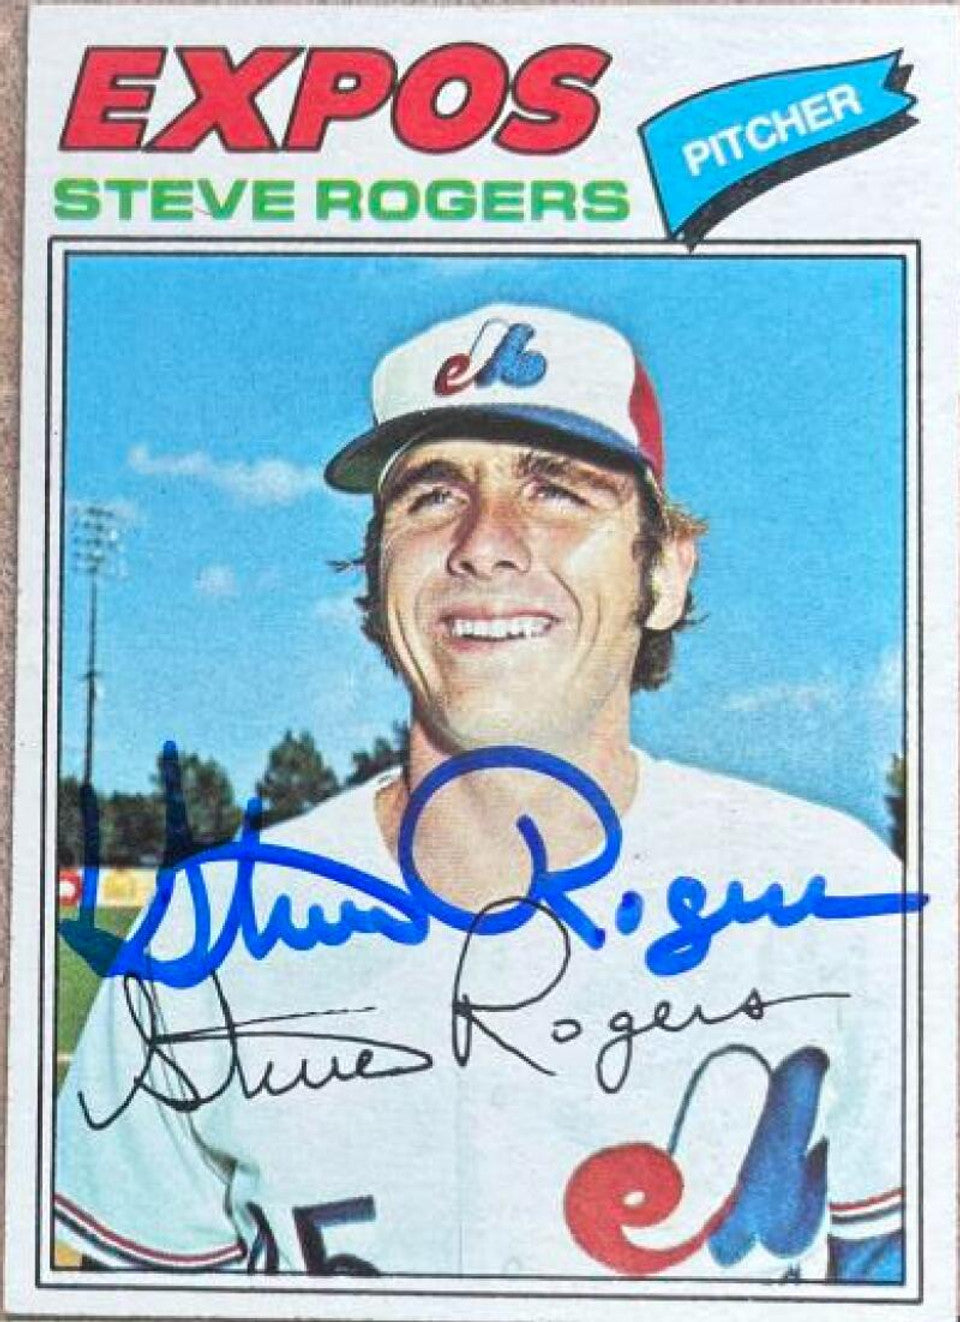 Steve Rogers Signed 1977 Topps Baseball Card - Montreal Expos